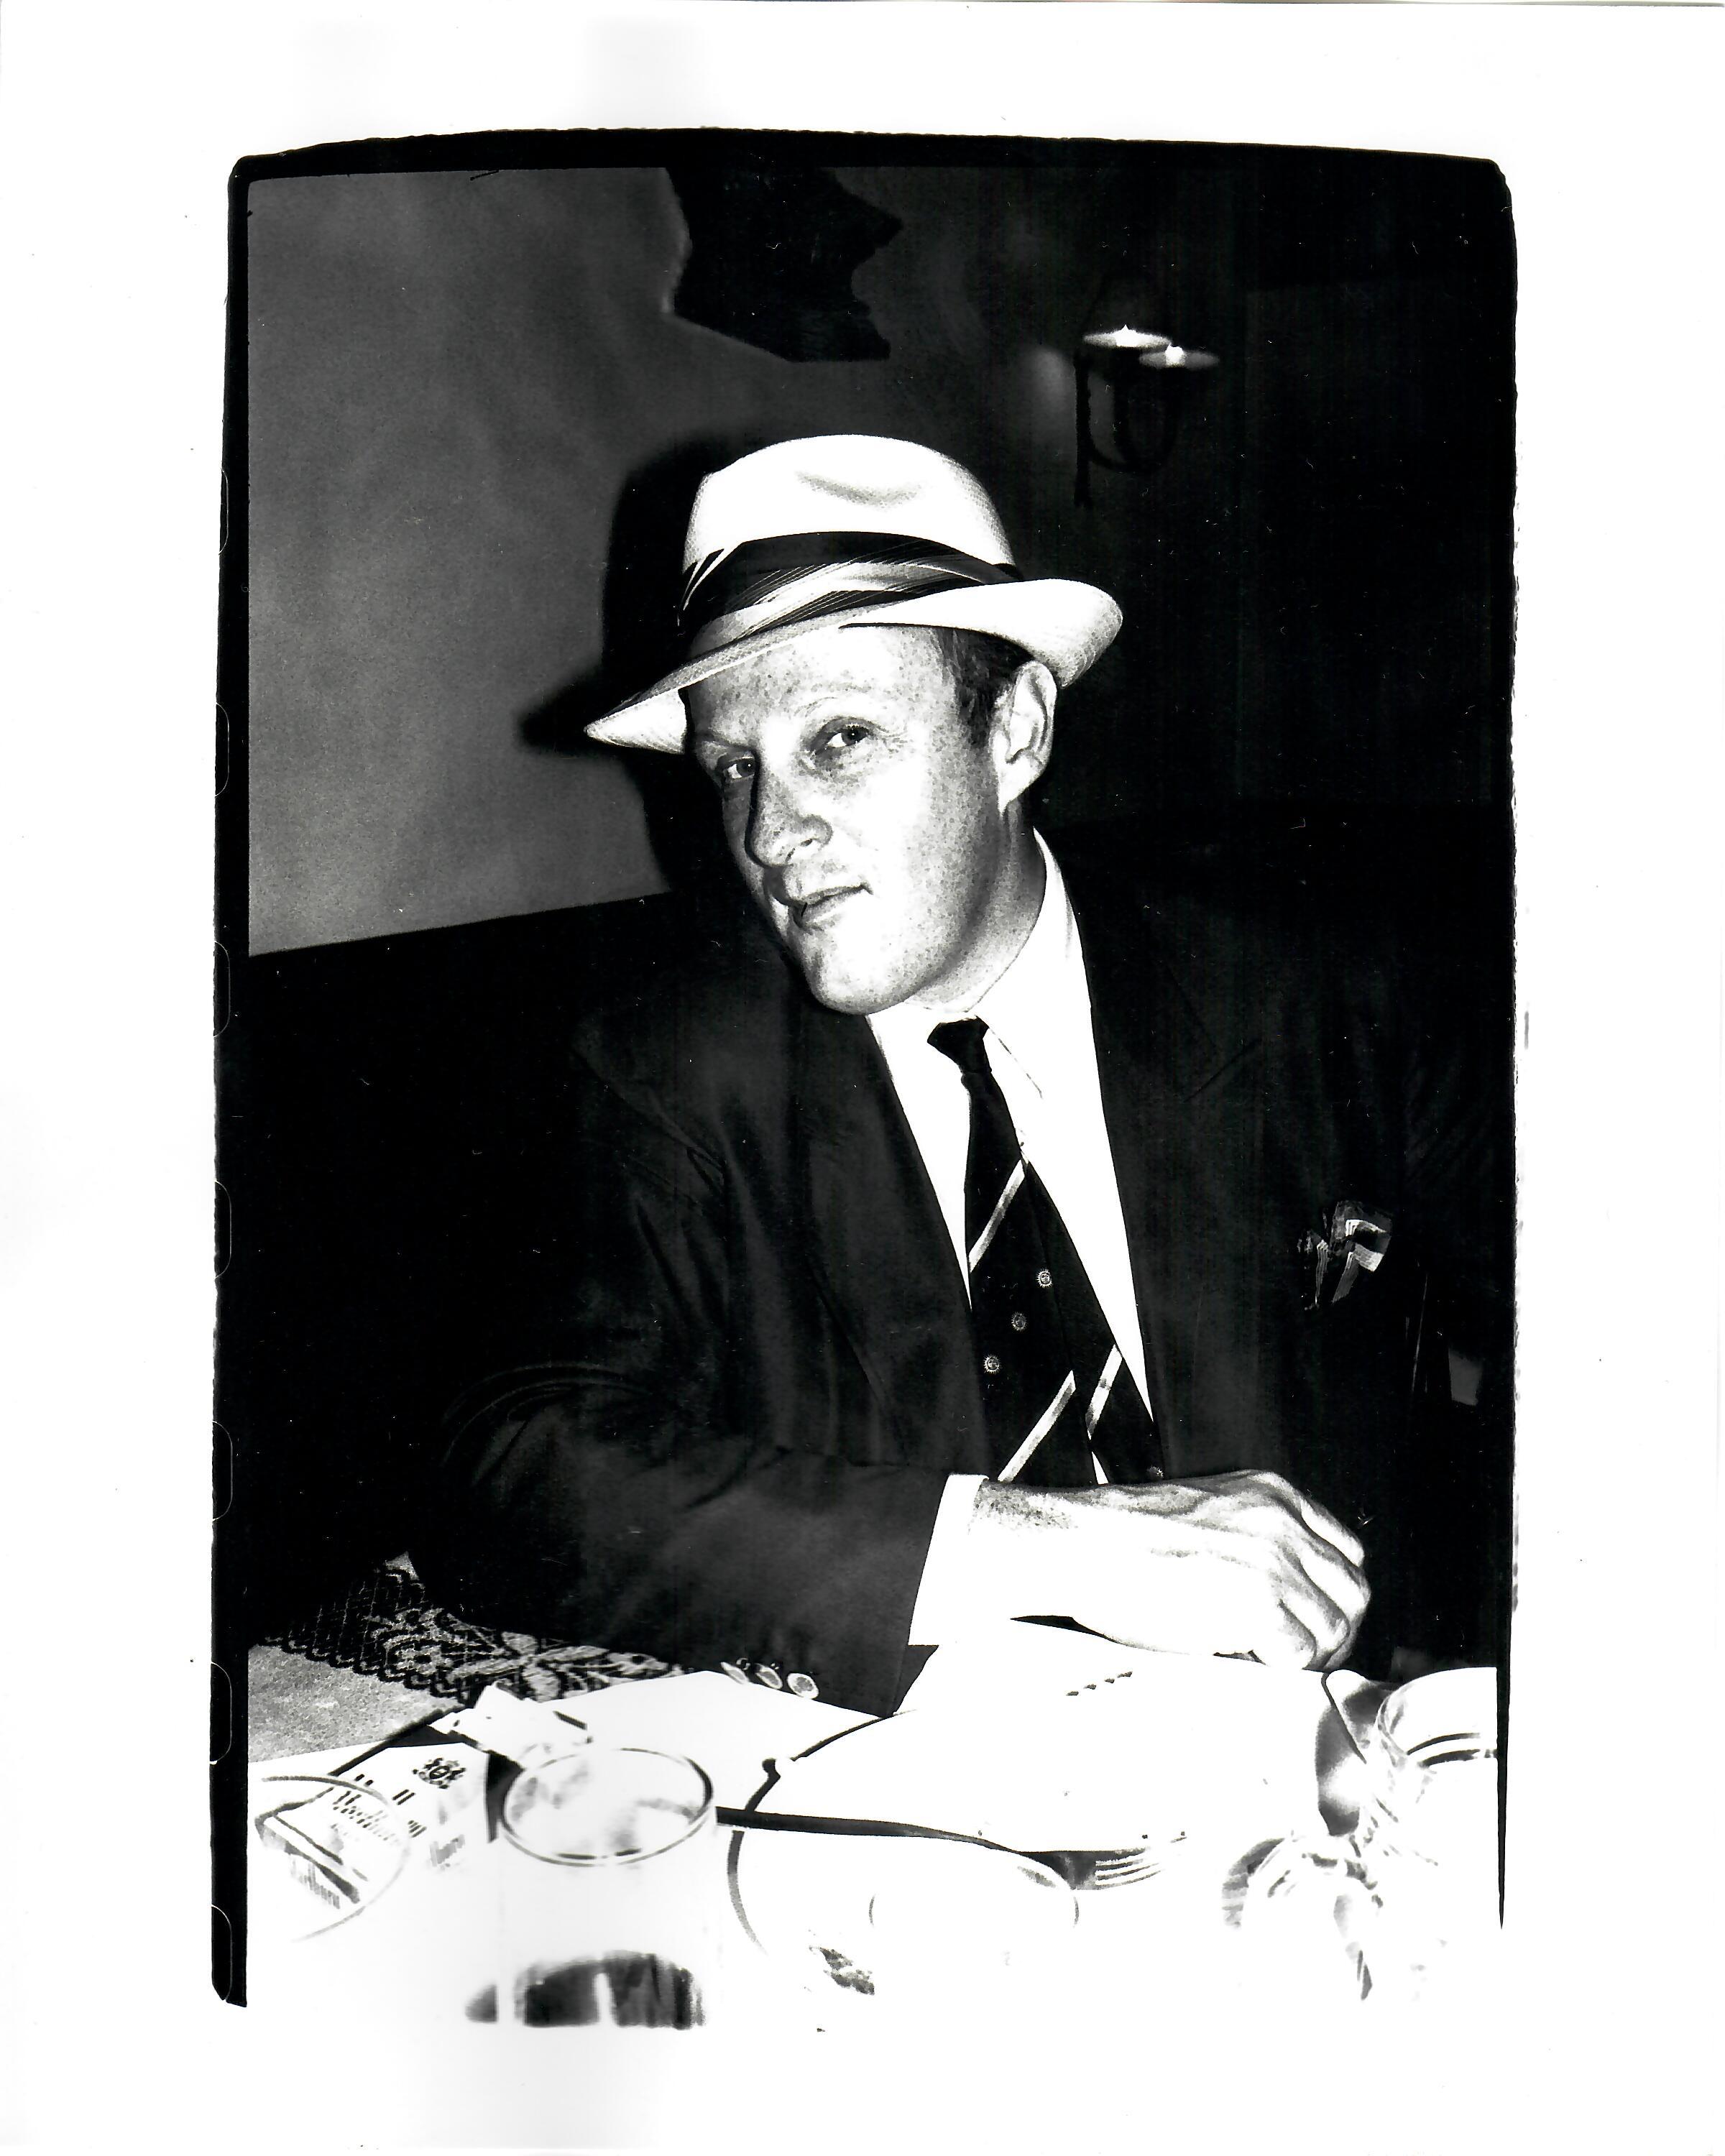 Andy Warhol Figurative Photograph - Bruno Bischofberger in Vienna